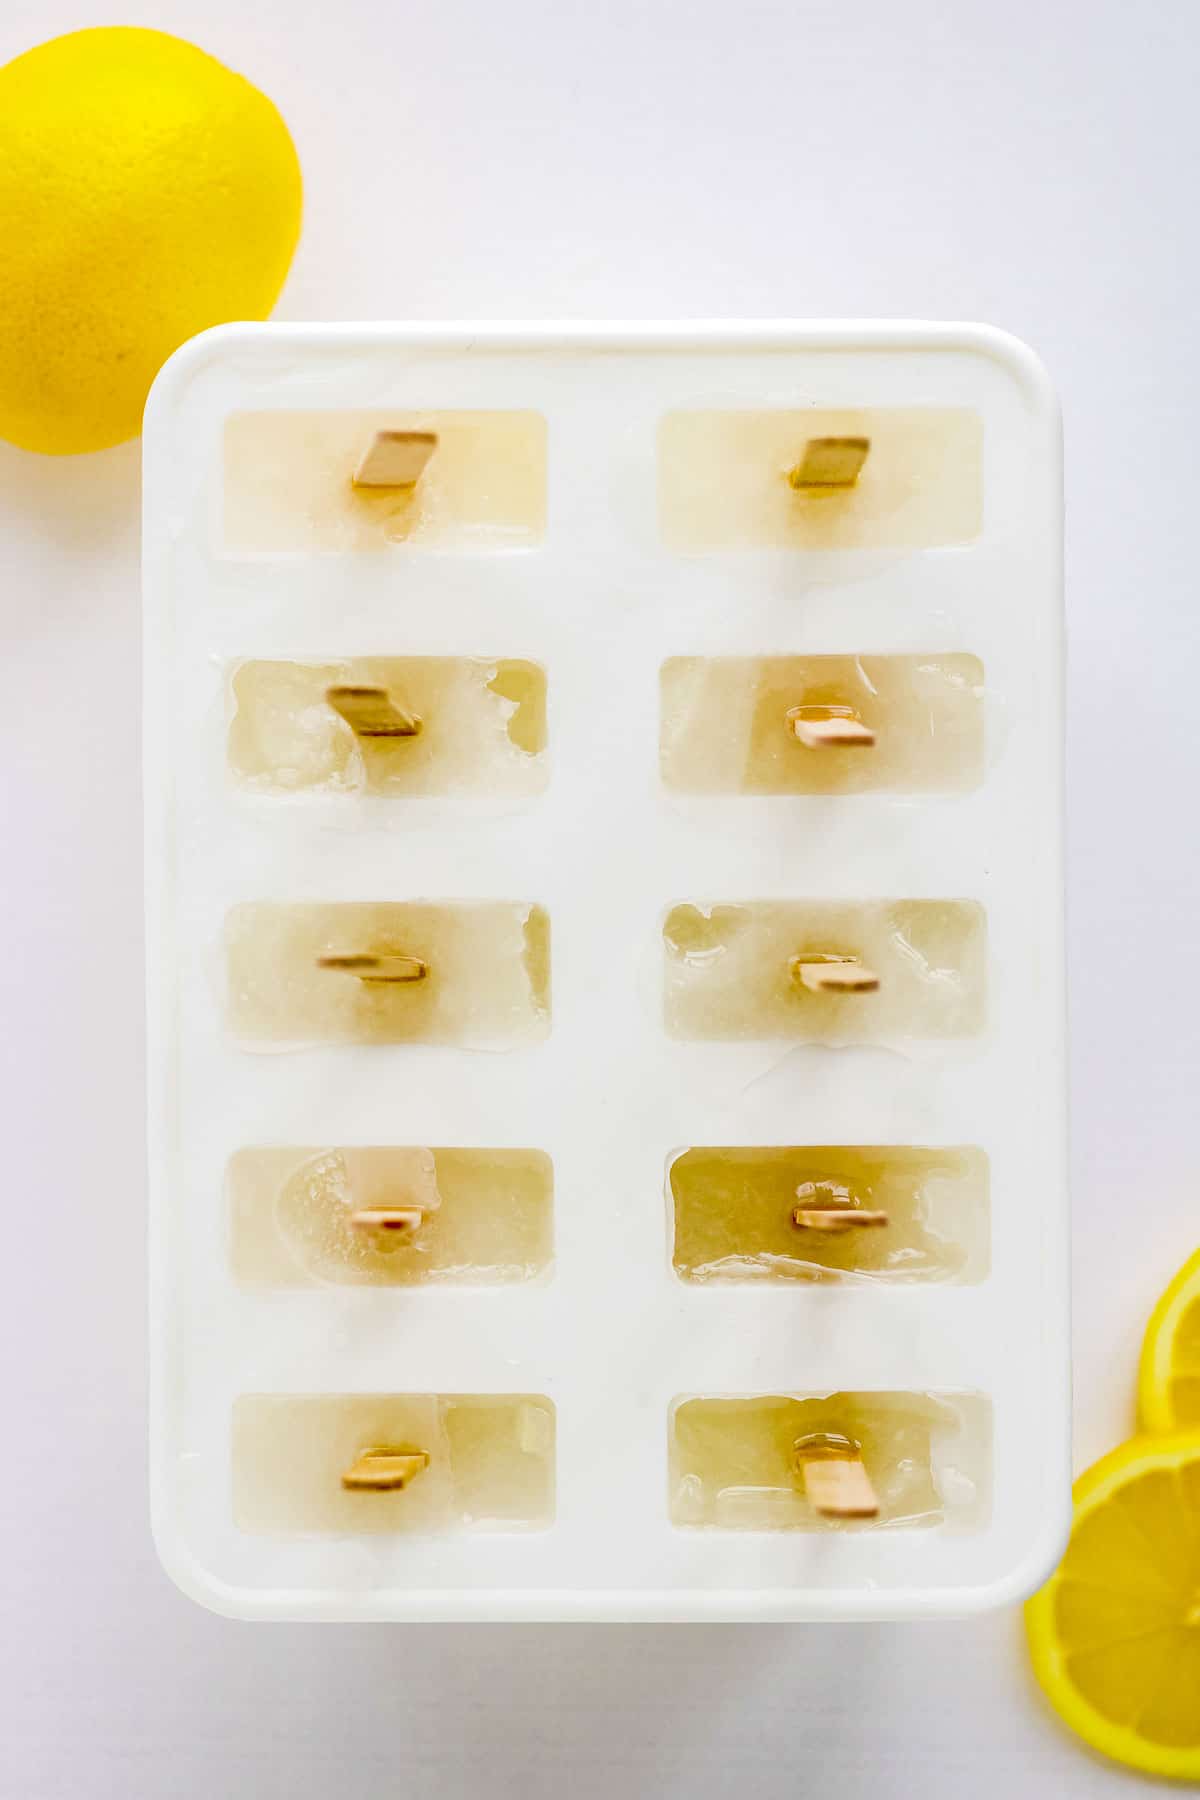 Overhead view of frozen lemonade popsicles in their molds.